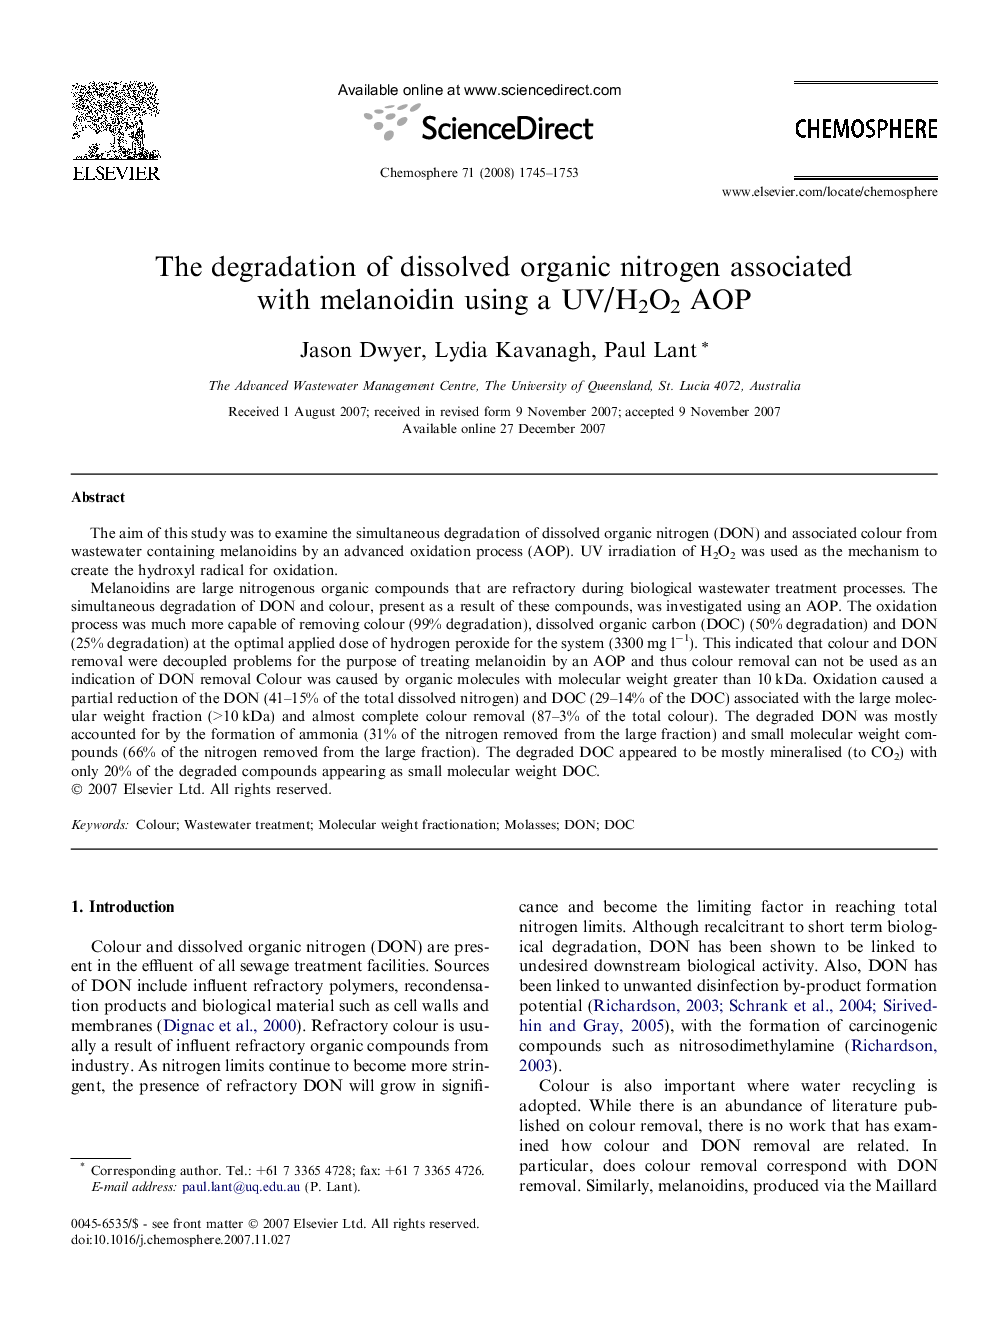 The degradation of dissolved organic nitrogen associated with melanoidin using a UV/H2O2 AOP